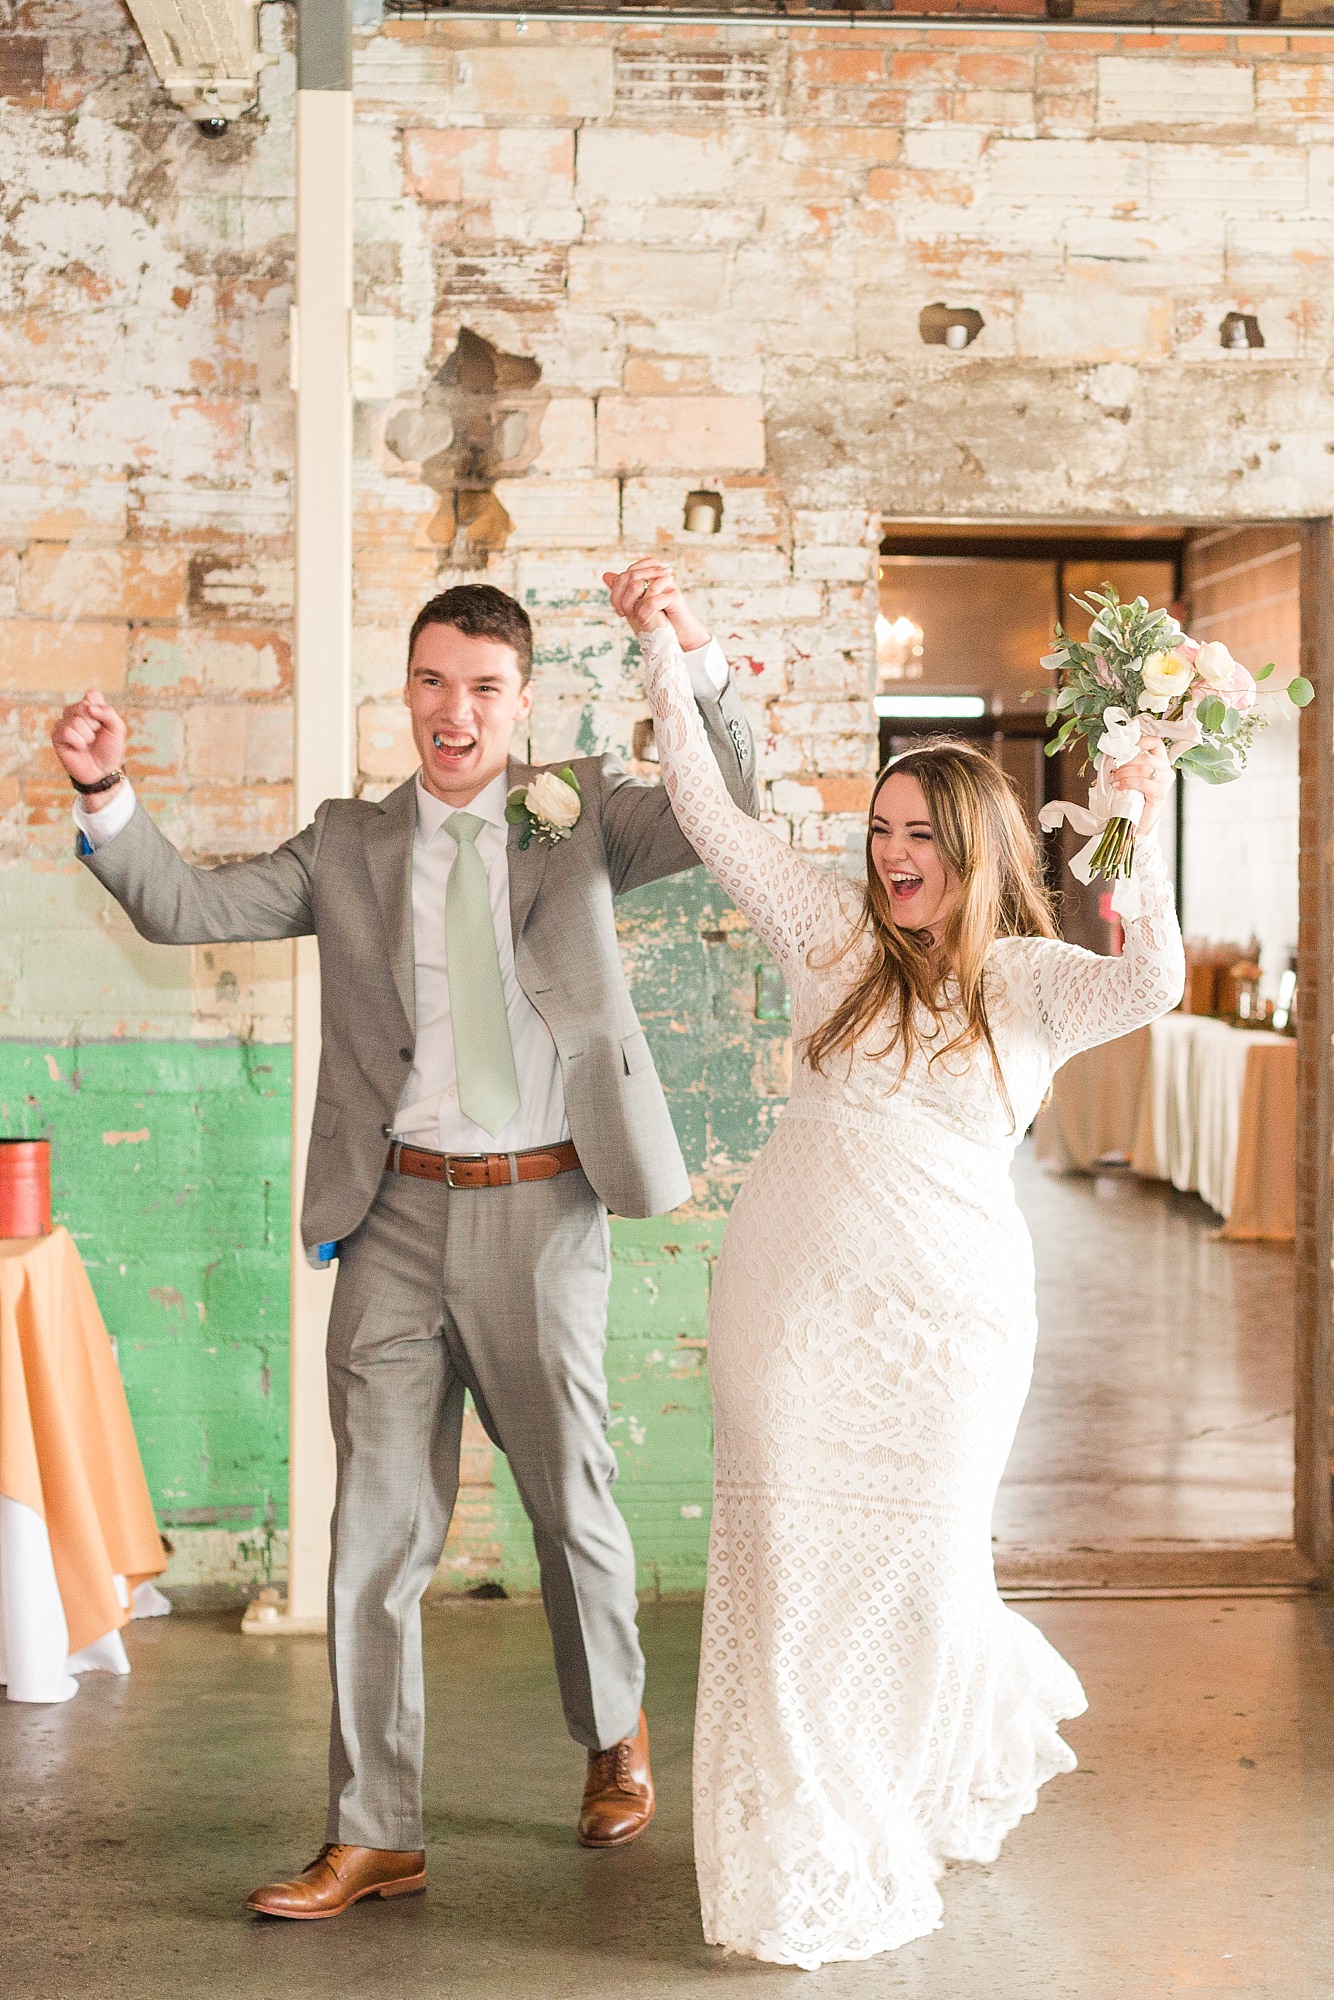 A newlywed couple dances into their wedding reception